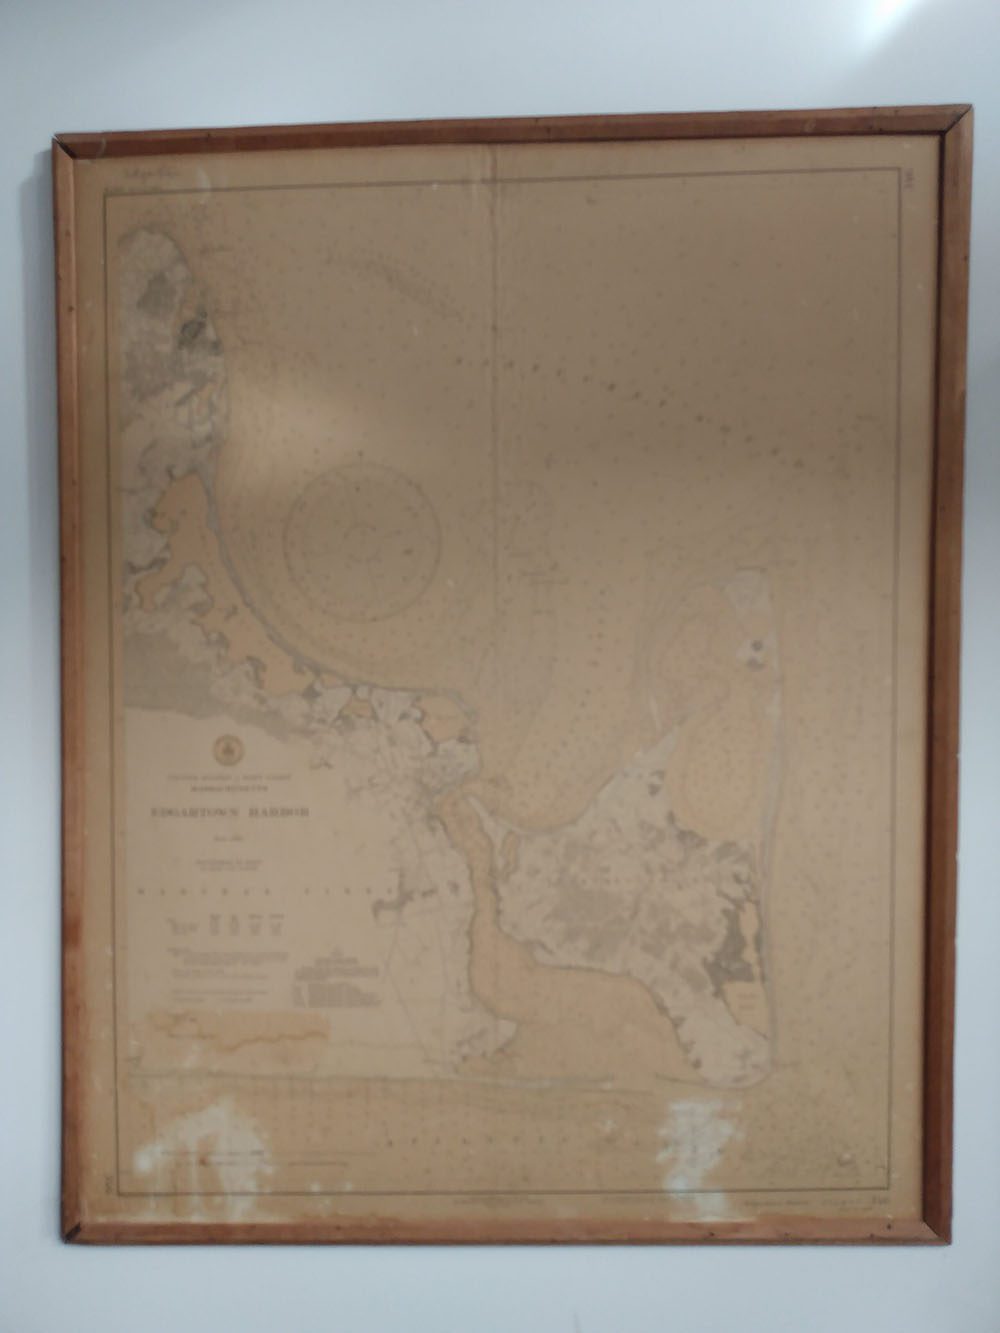 Local Martha’s Vineyard Antiques - Edgartown Harbor Chart 1930